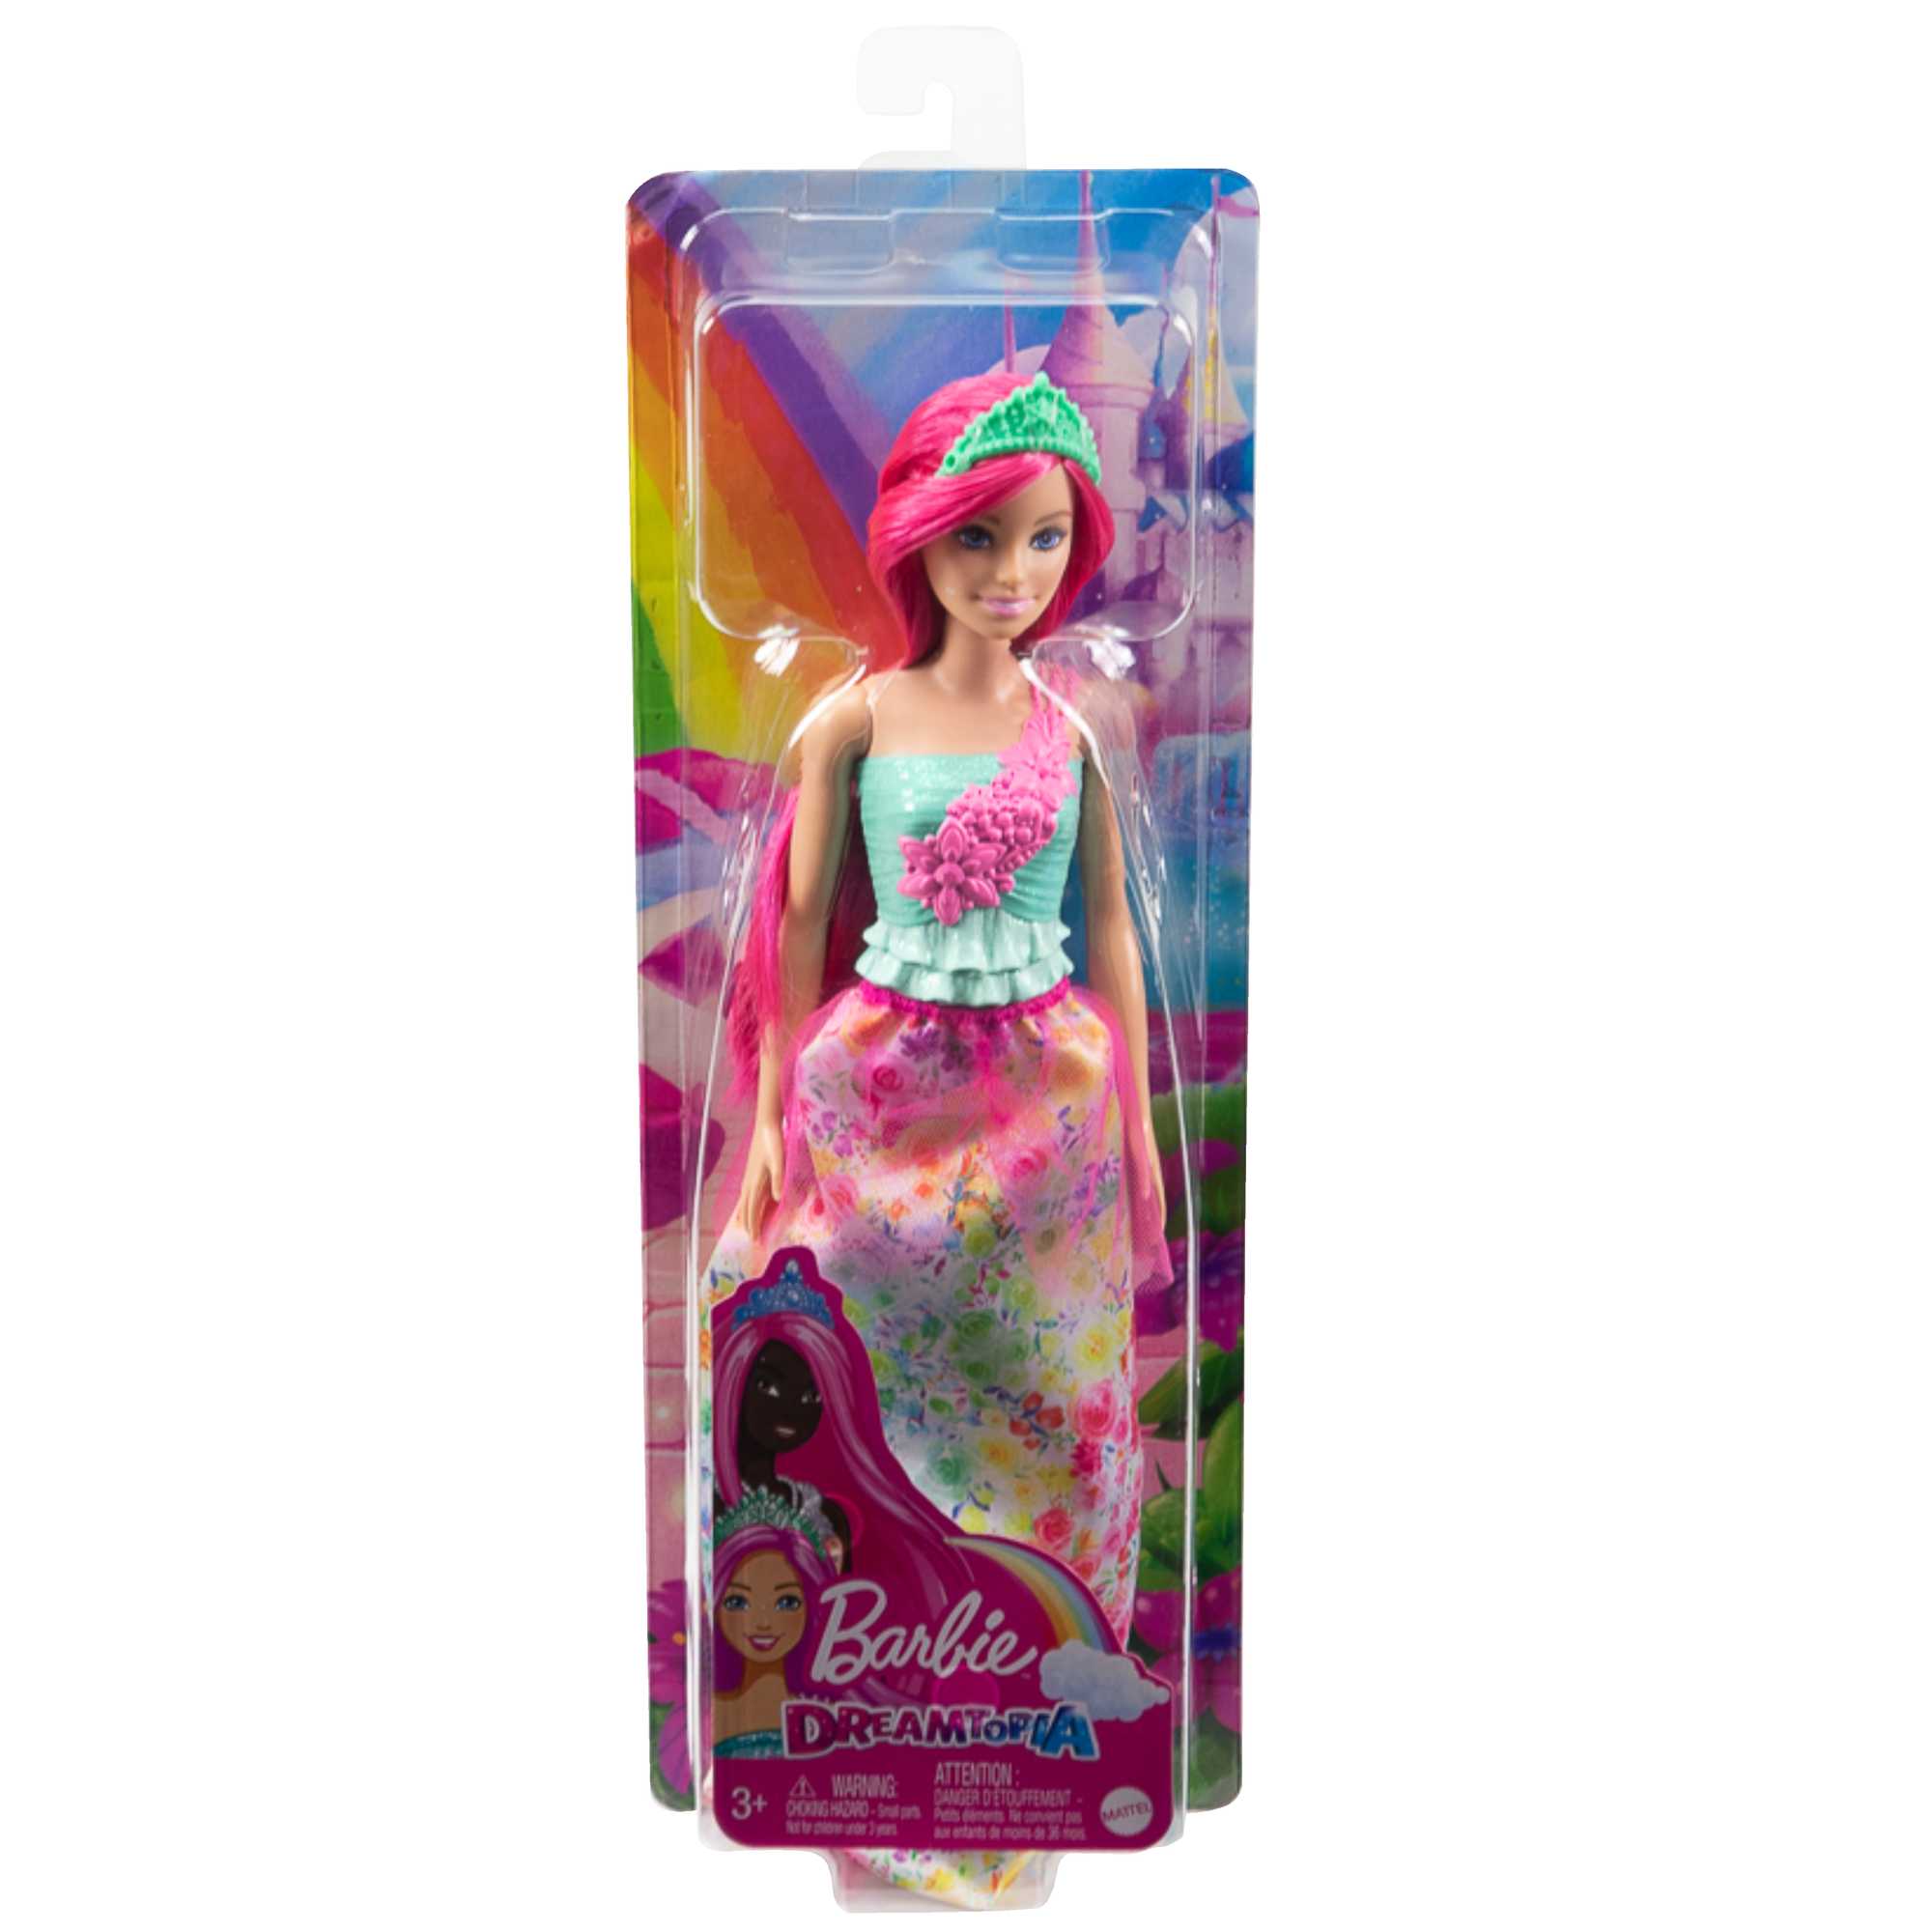 Barbie Dreamtopia Doll Hgr14 MATTEL - HGR13-HGR14